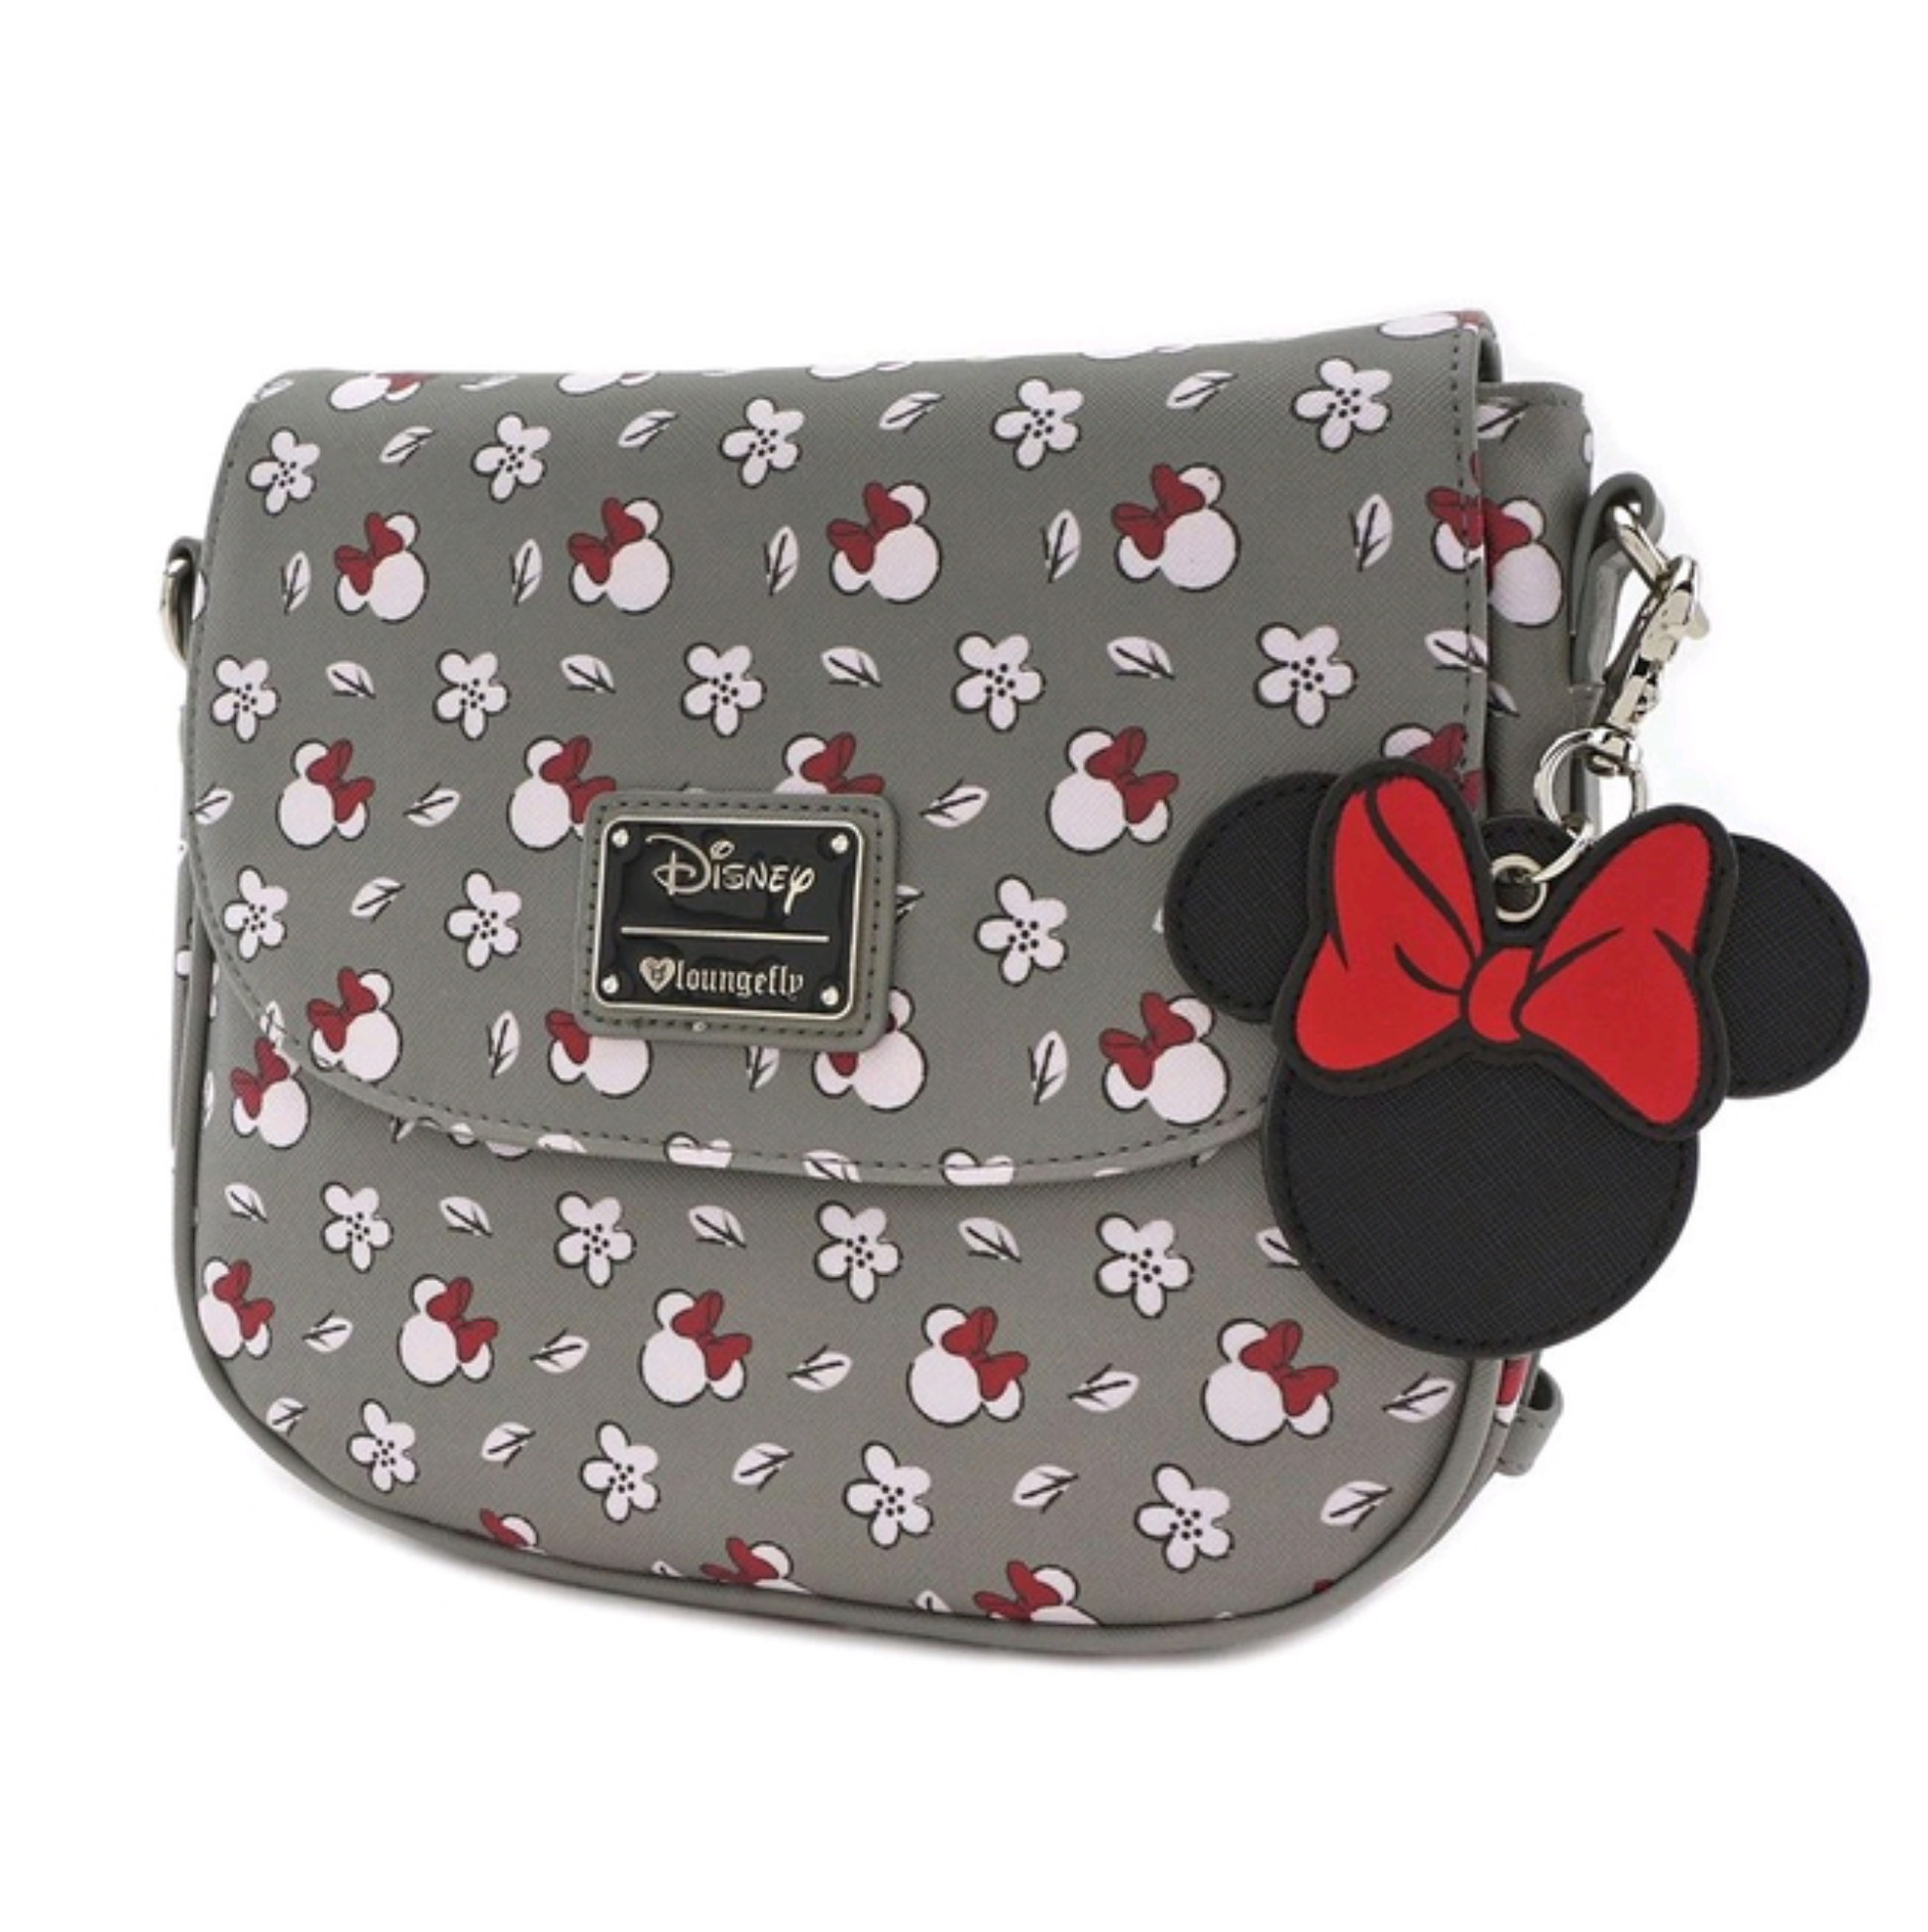 koolaz-ltd - Loungefly x Disney - Minnie Print Handbag - Loungfly - Handbag